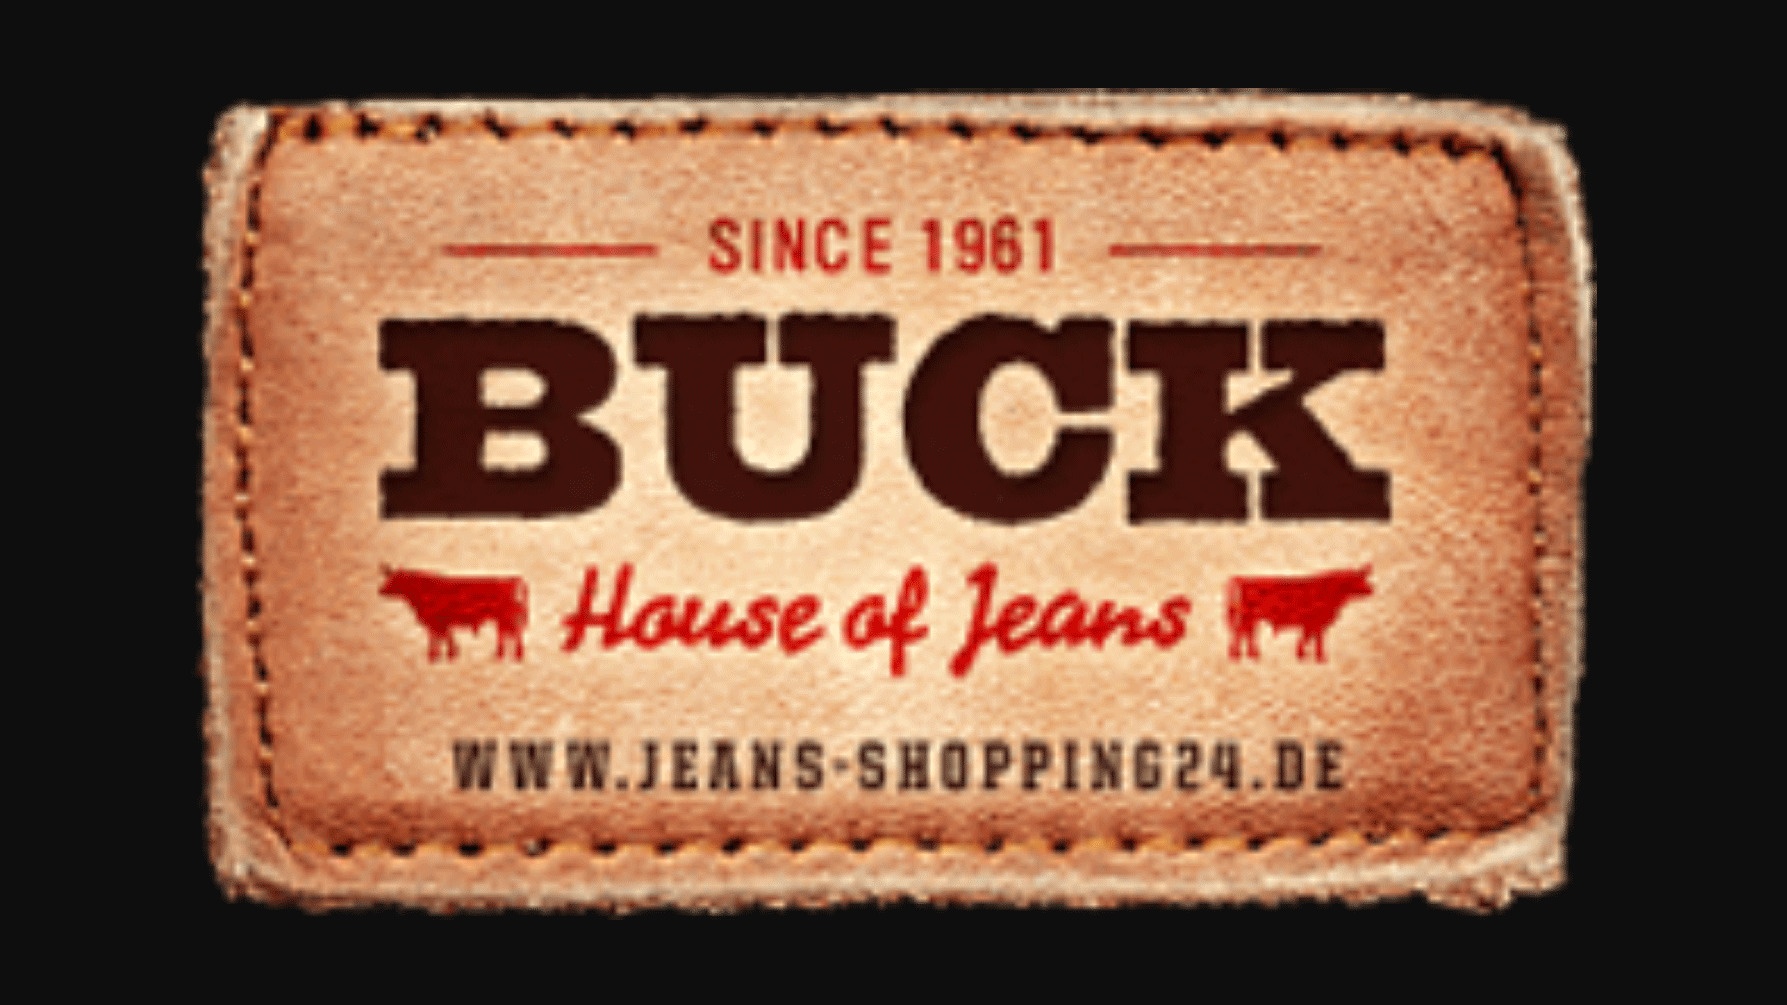 Buck Jeans. BK-Buck джинсы производитель. Git in джинсы производитель. Джинсы BK Buck Jeans кто производитель. 1 24 shop